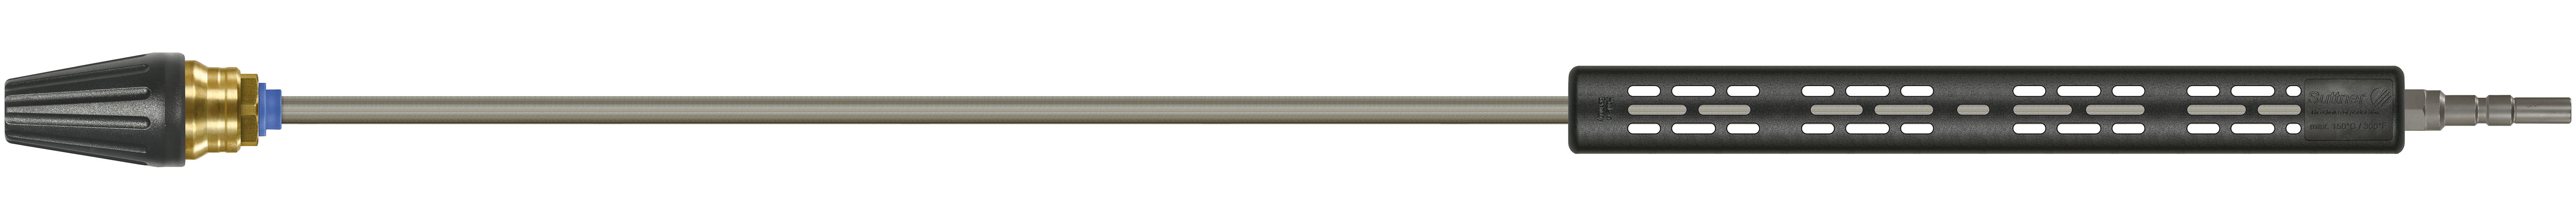 Rotabuse céramique avec lance 1000mm, 200-400 bar, Calibre 070